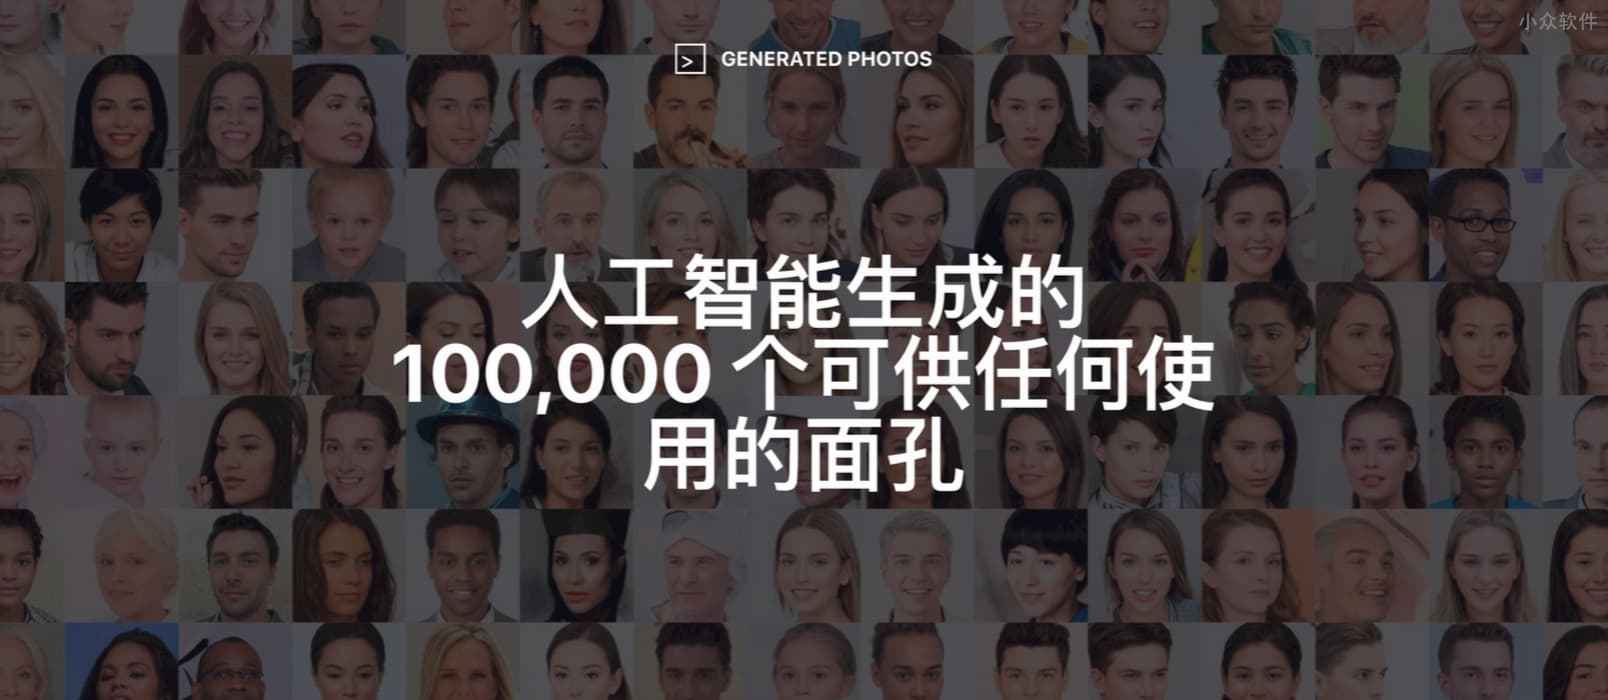 100,000 Faces - 10万张不要肖像权的人脸照片，随便用 1